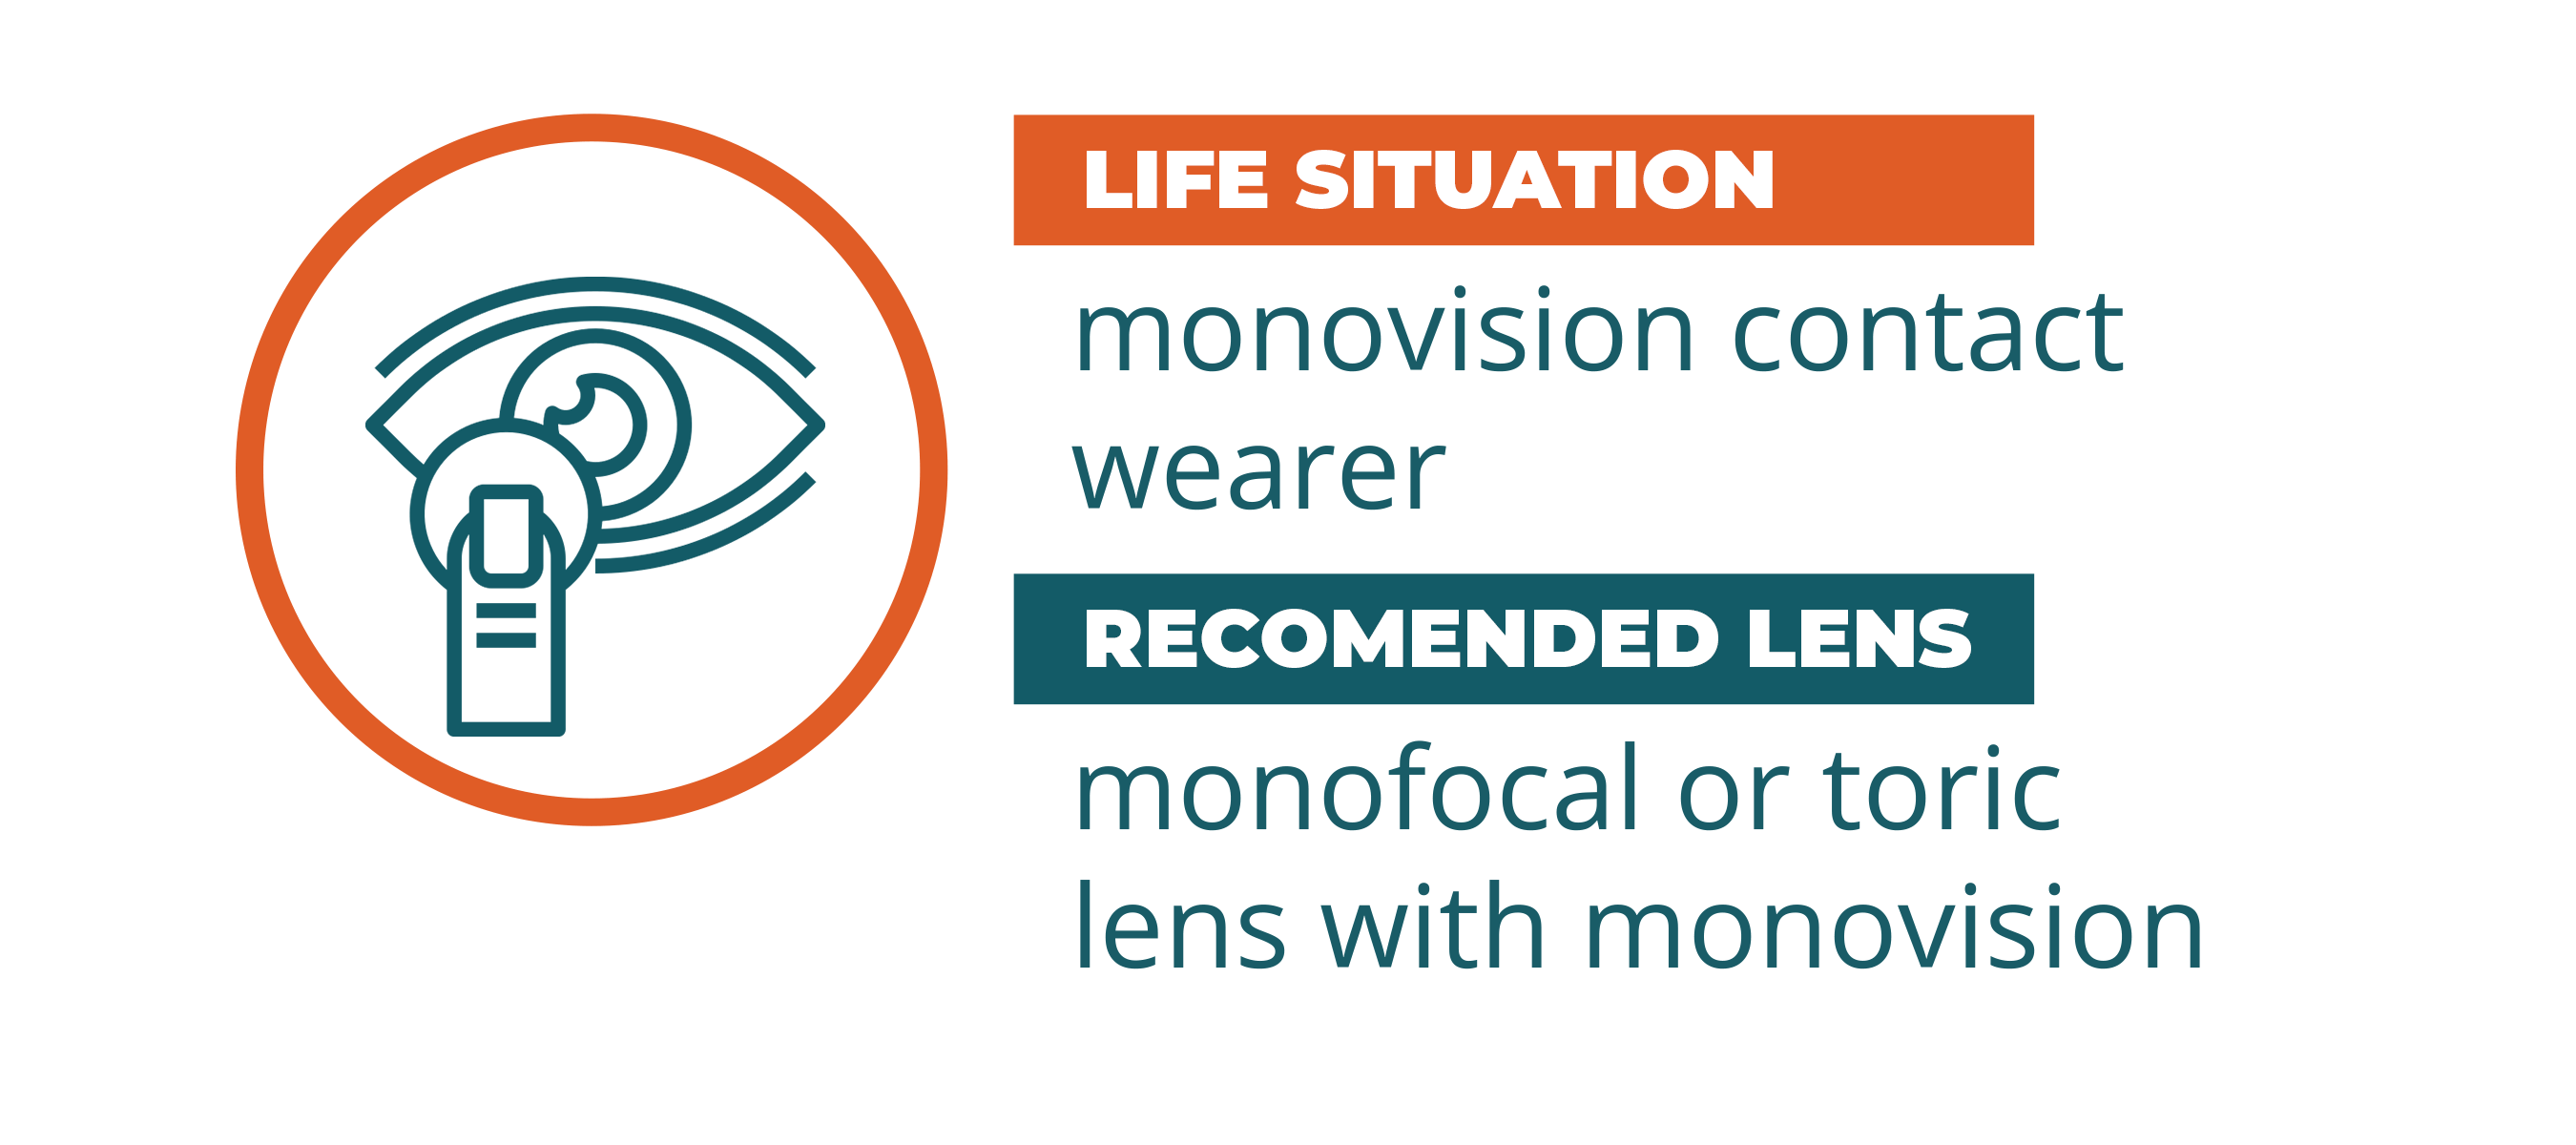 Advantages of Monofocal or Toric Lenses